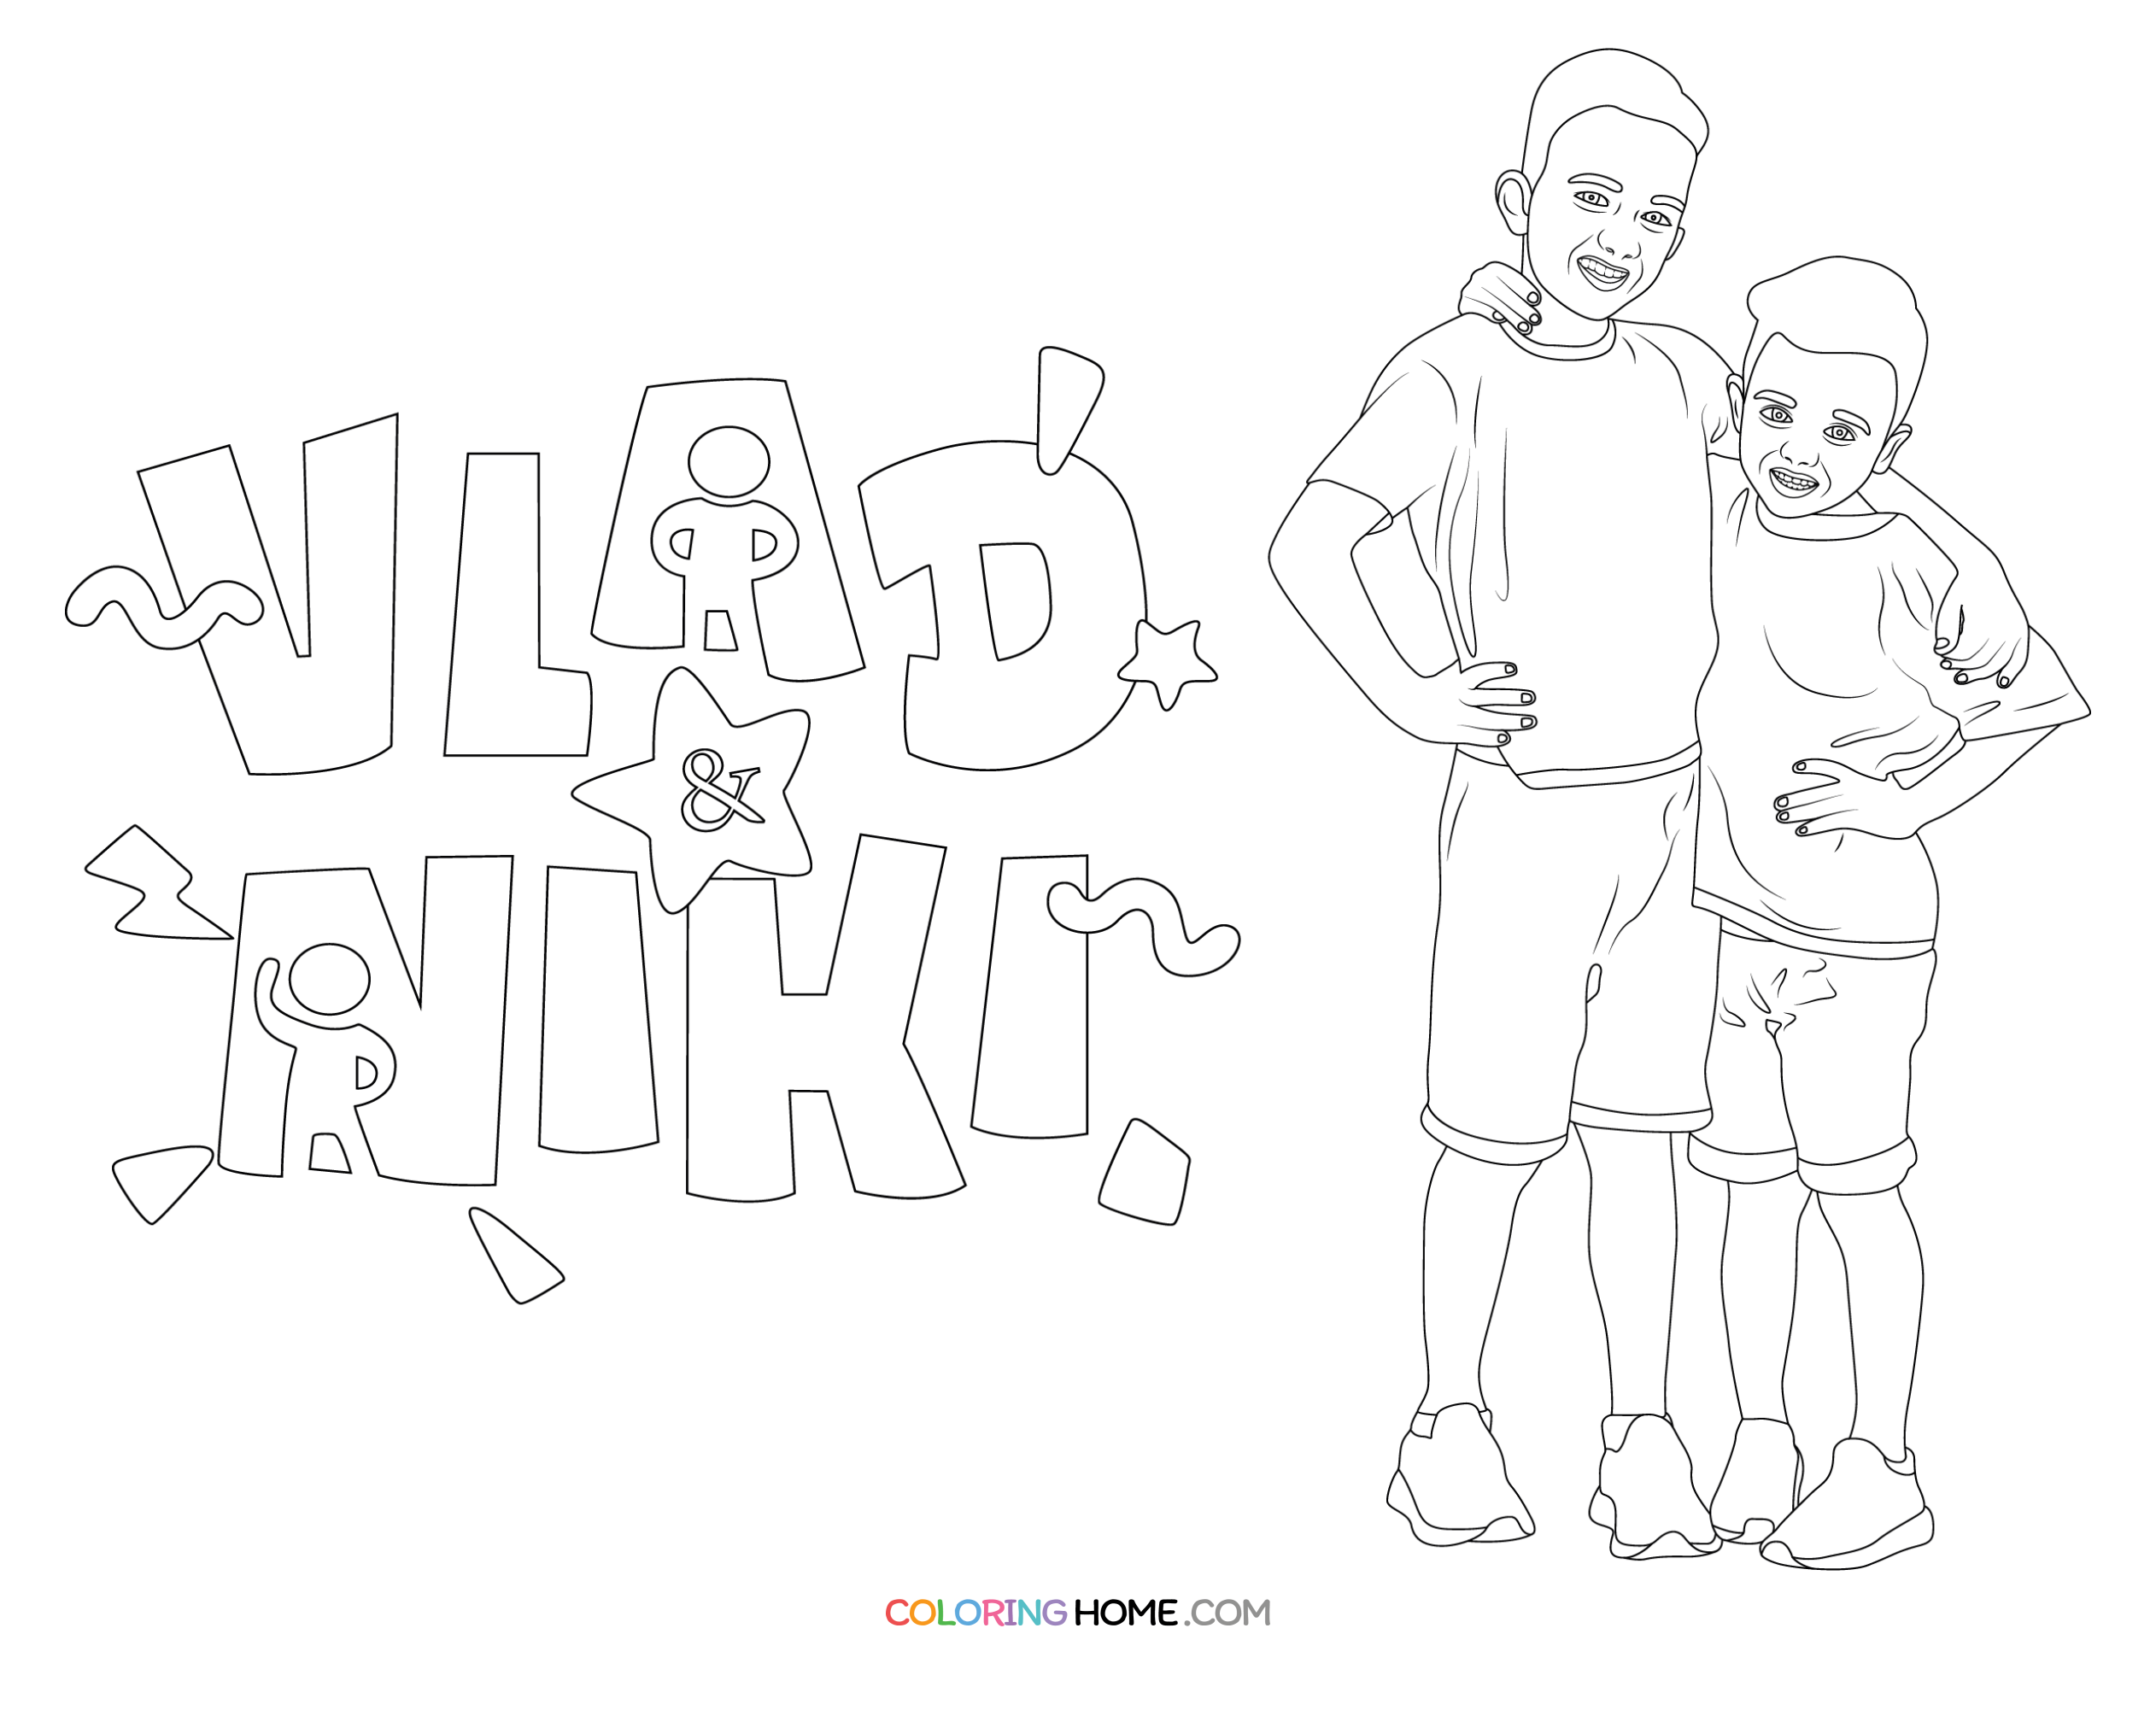 Vlad & Nicki brothers coloring page